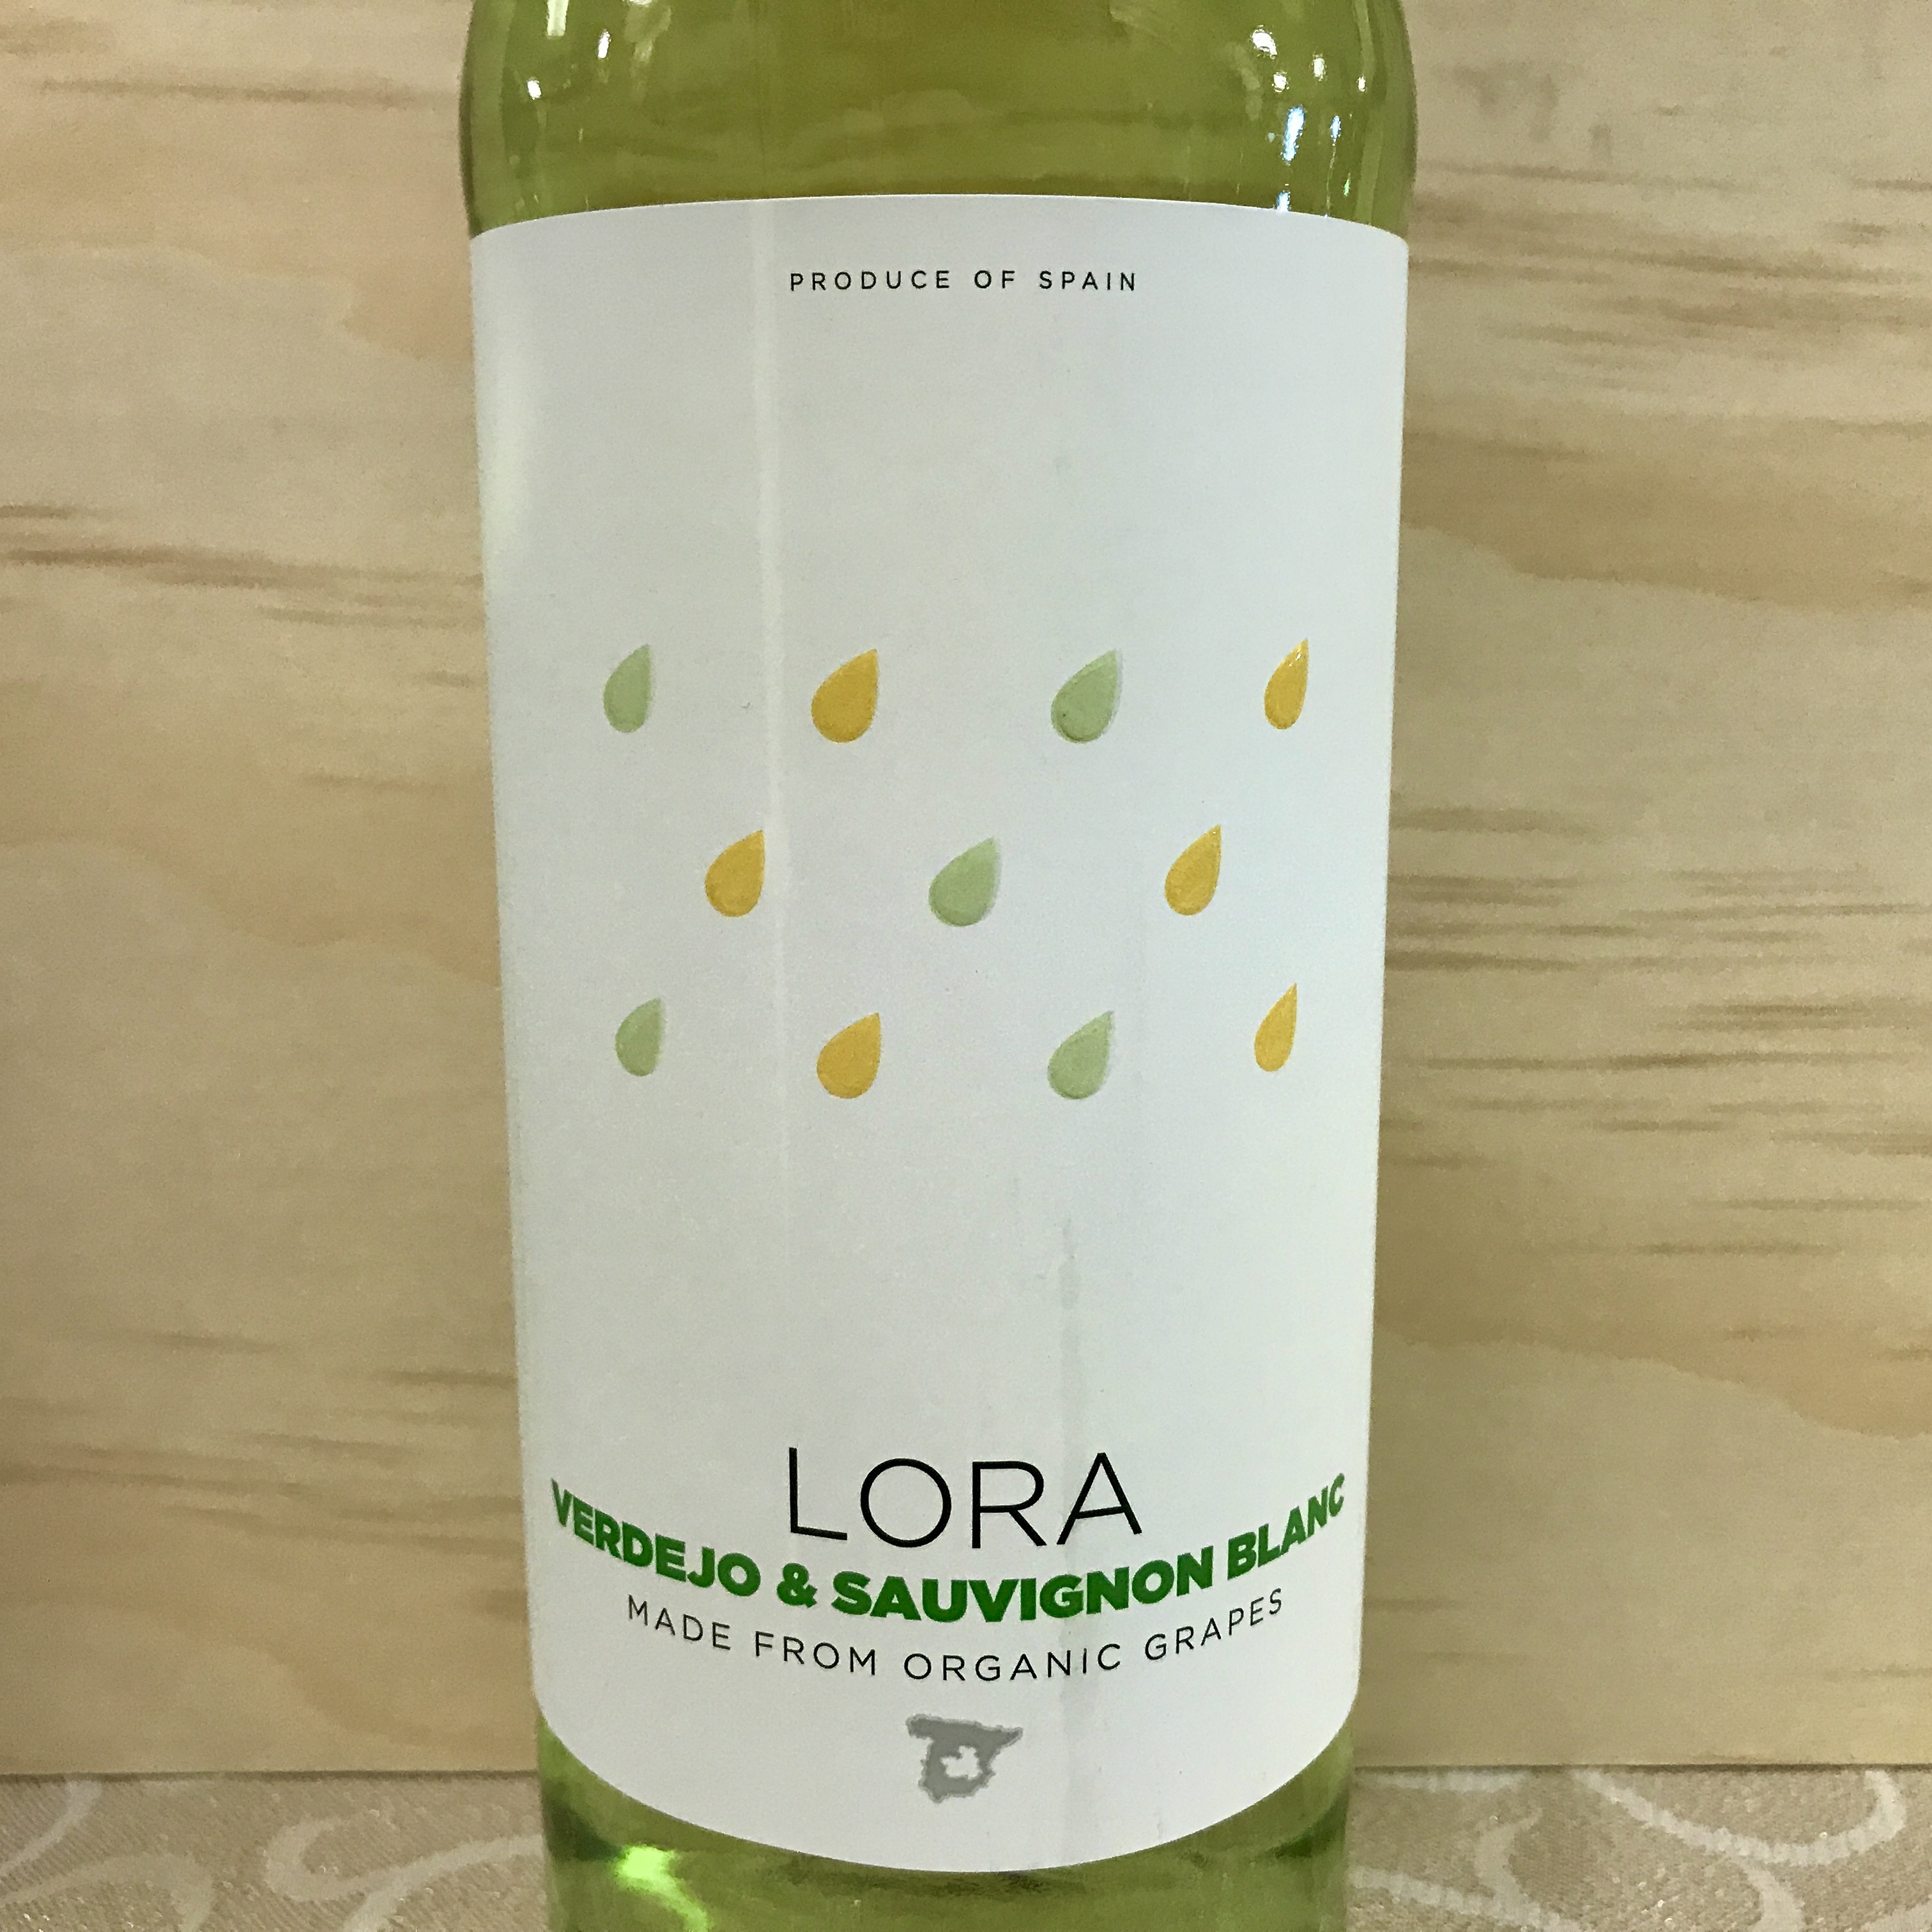 Lora Verdejo - Sauvignon Blanc, made from Organic Grapes 2021